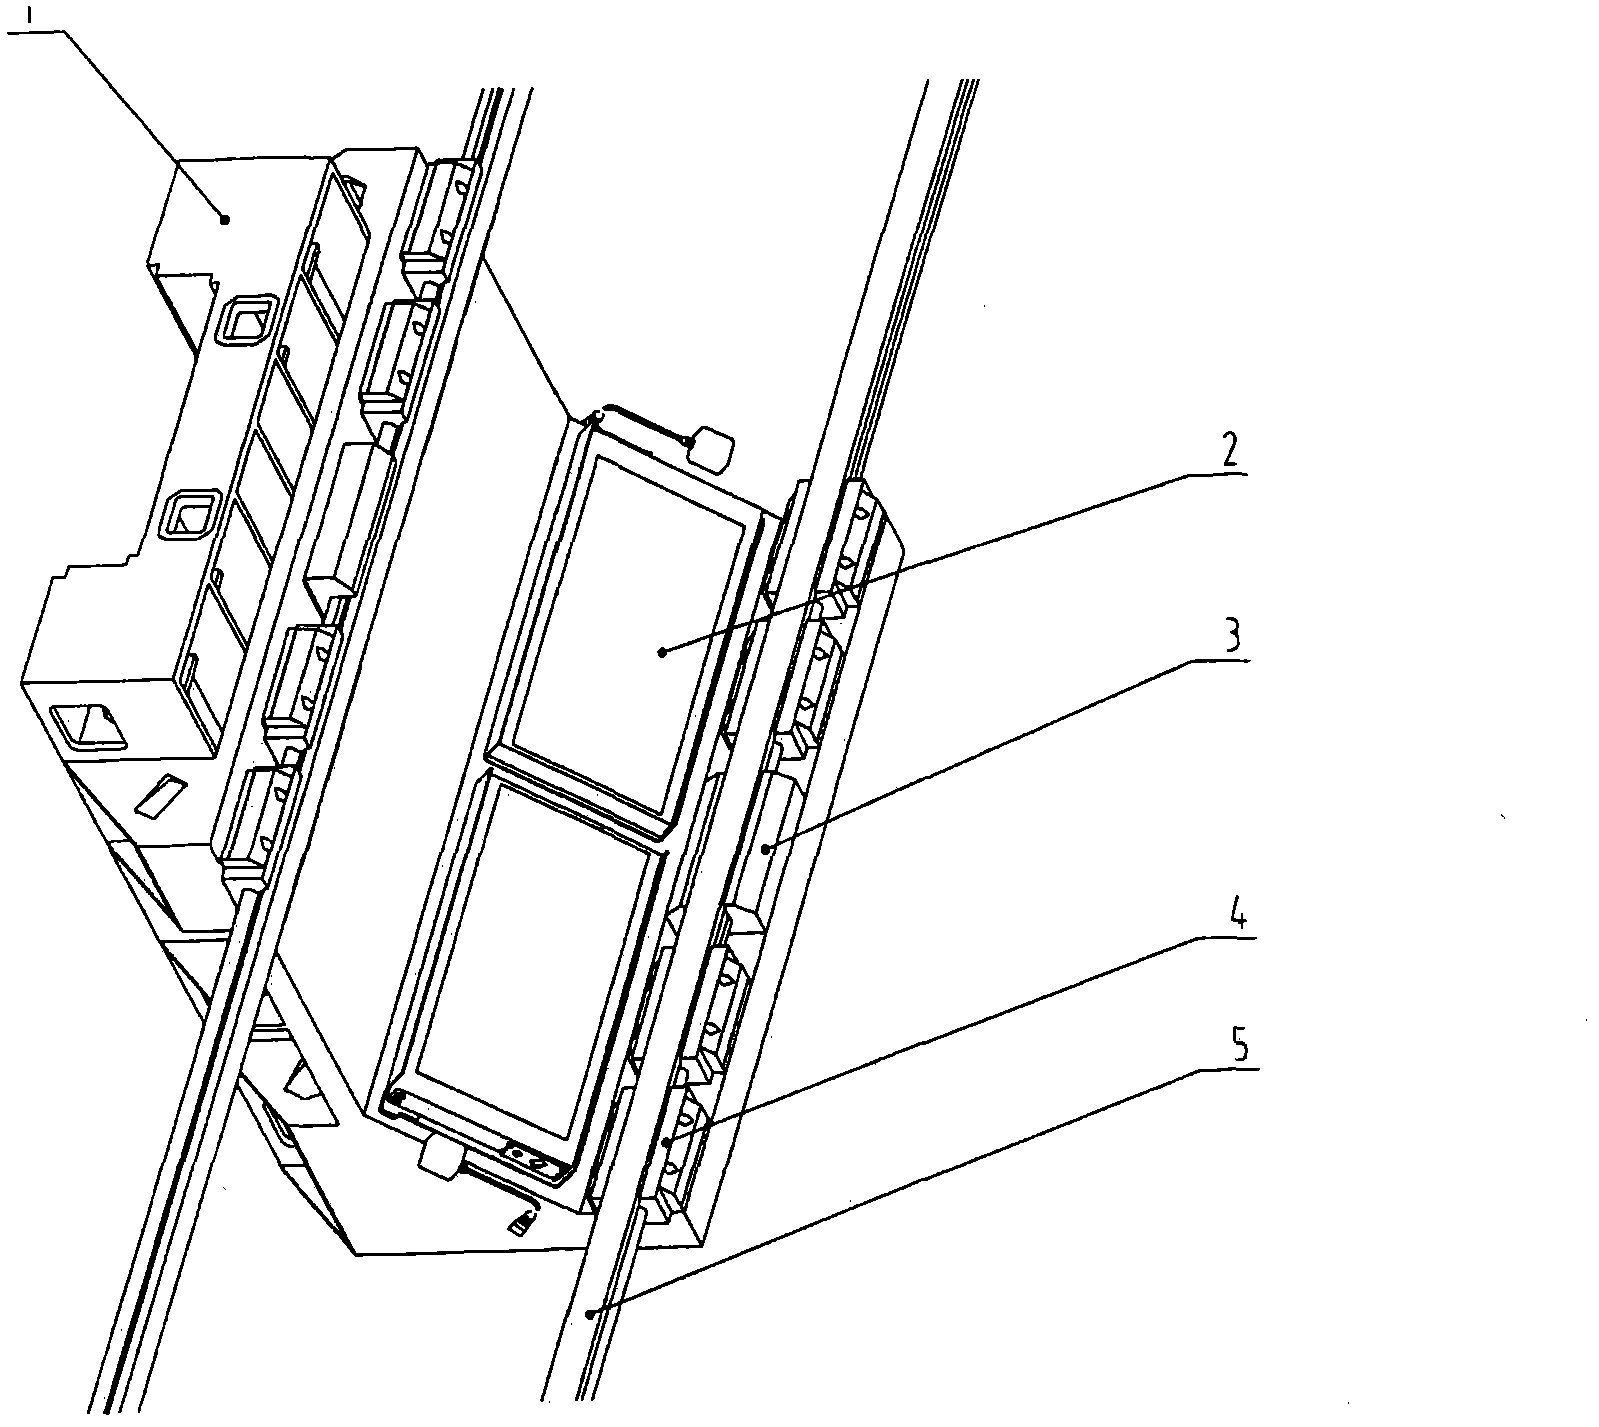 Regular L-shaped sliding plate applying linear motor driving